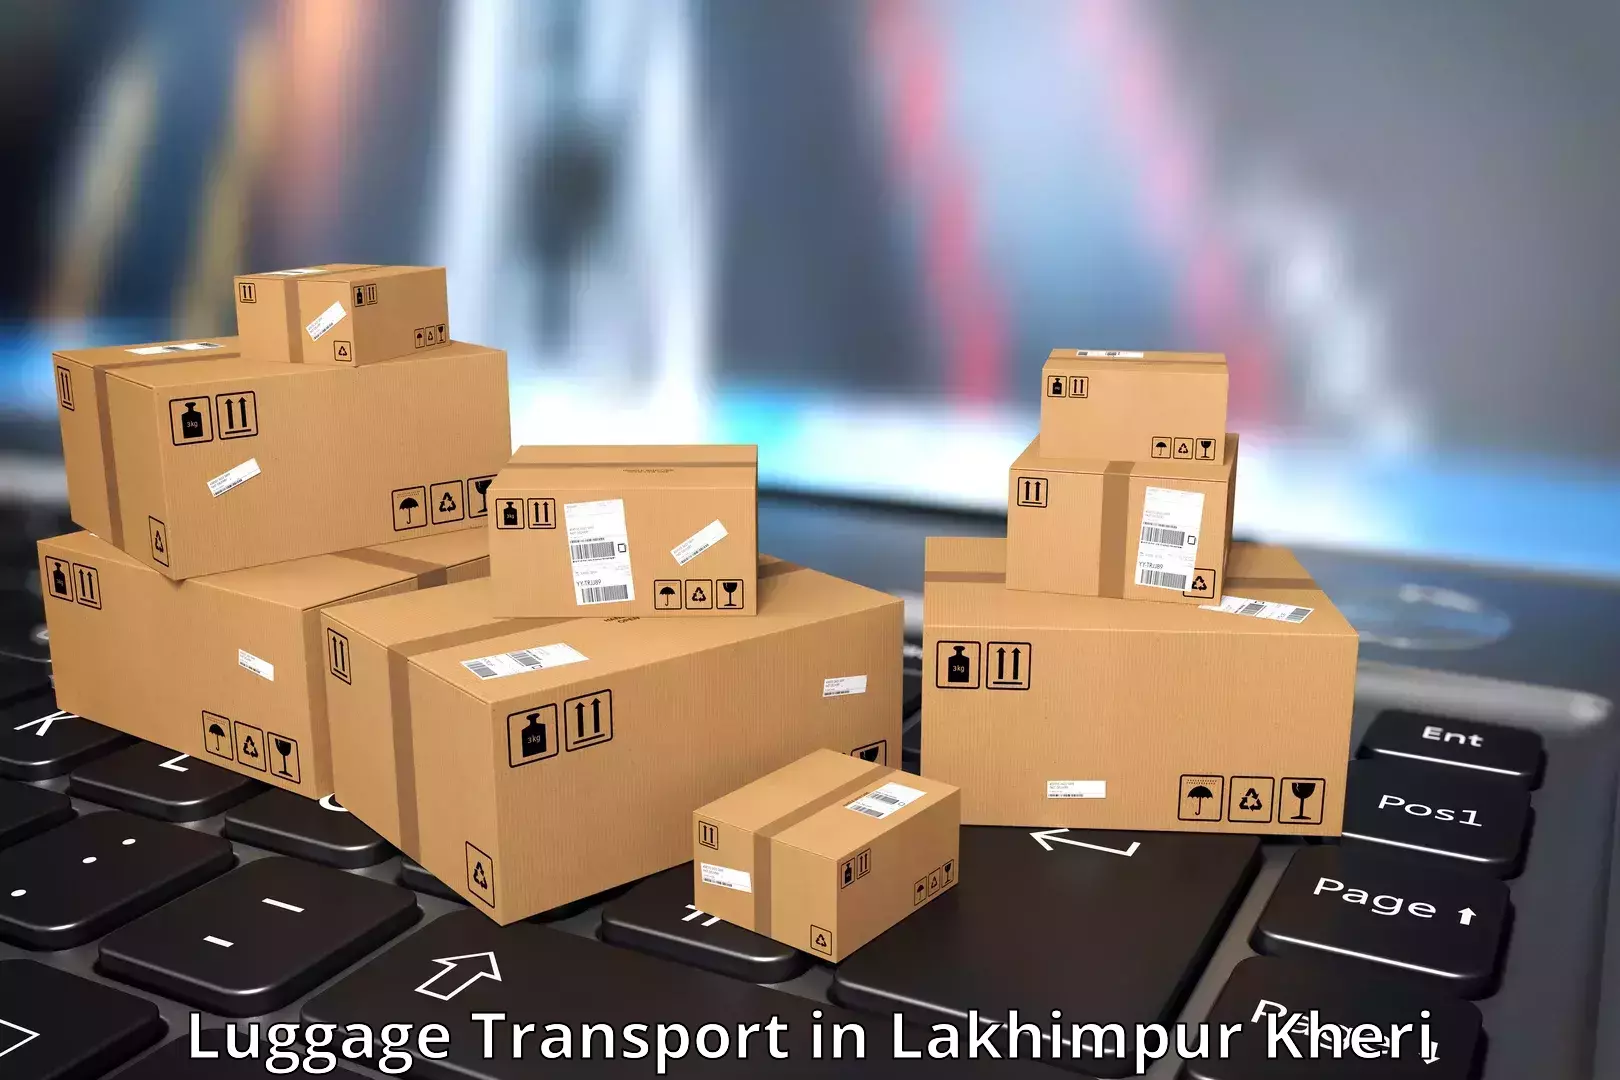 Luggage transport operations in Lakhimpur Kheri